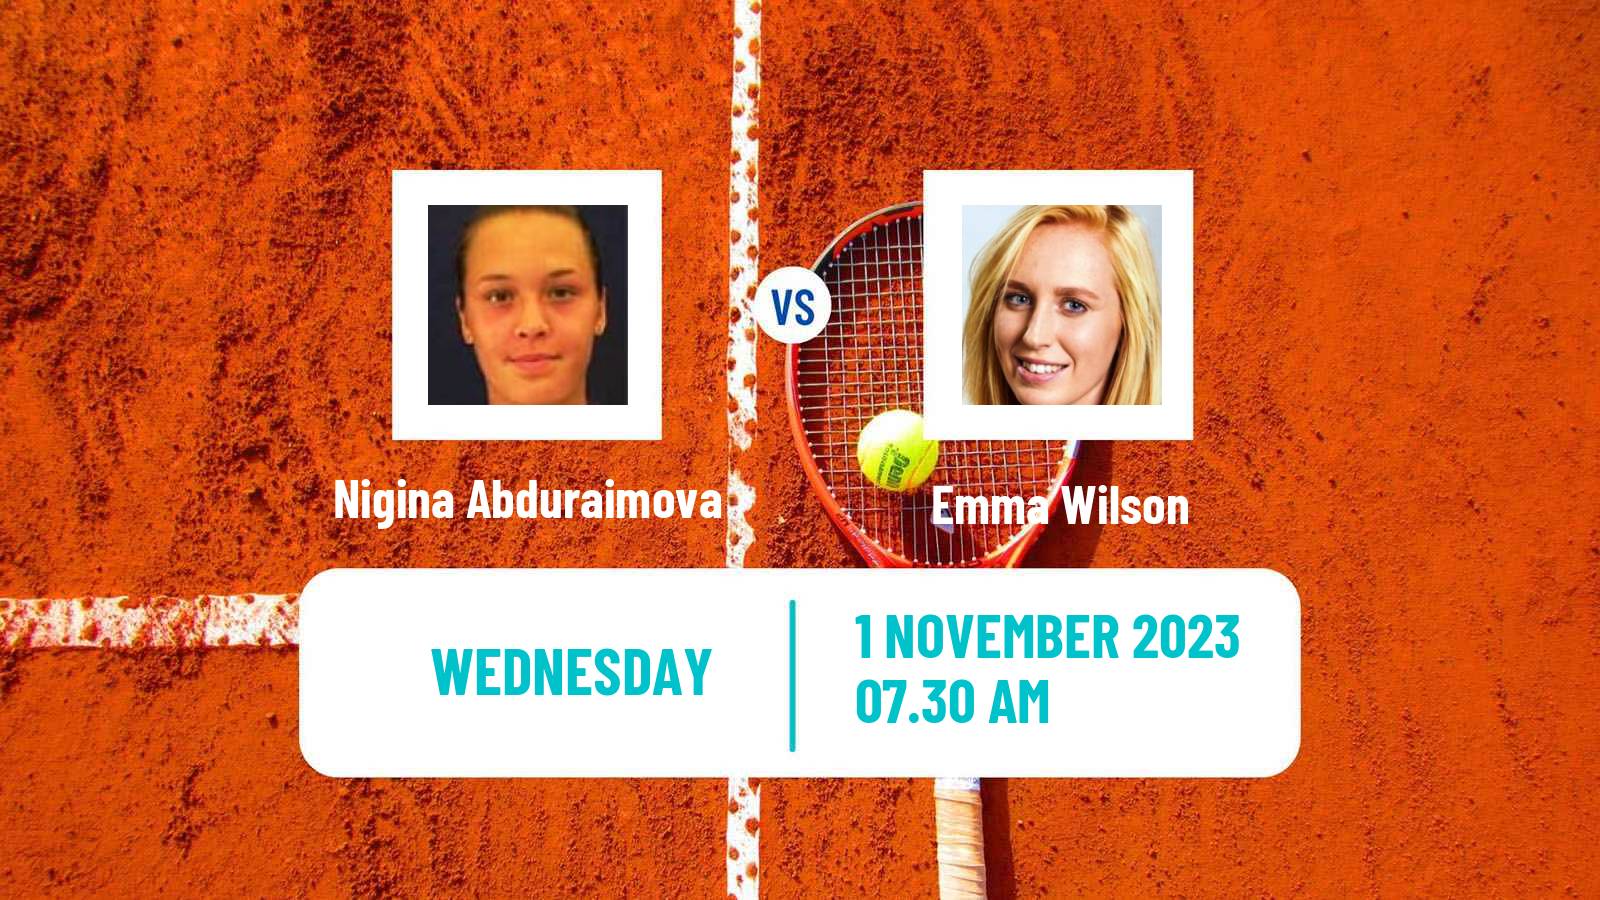 Tennis ITF W25 Sunderland Women Nigina Abduraimova - Emma Wilson